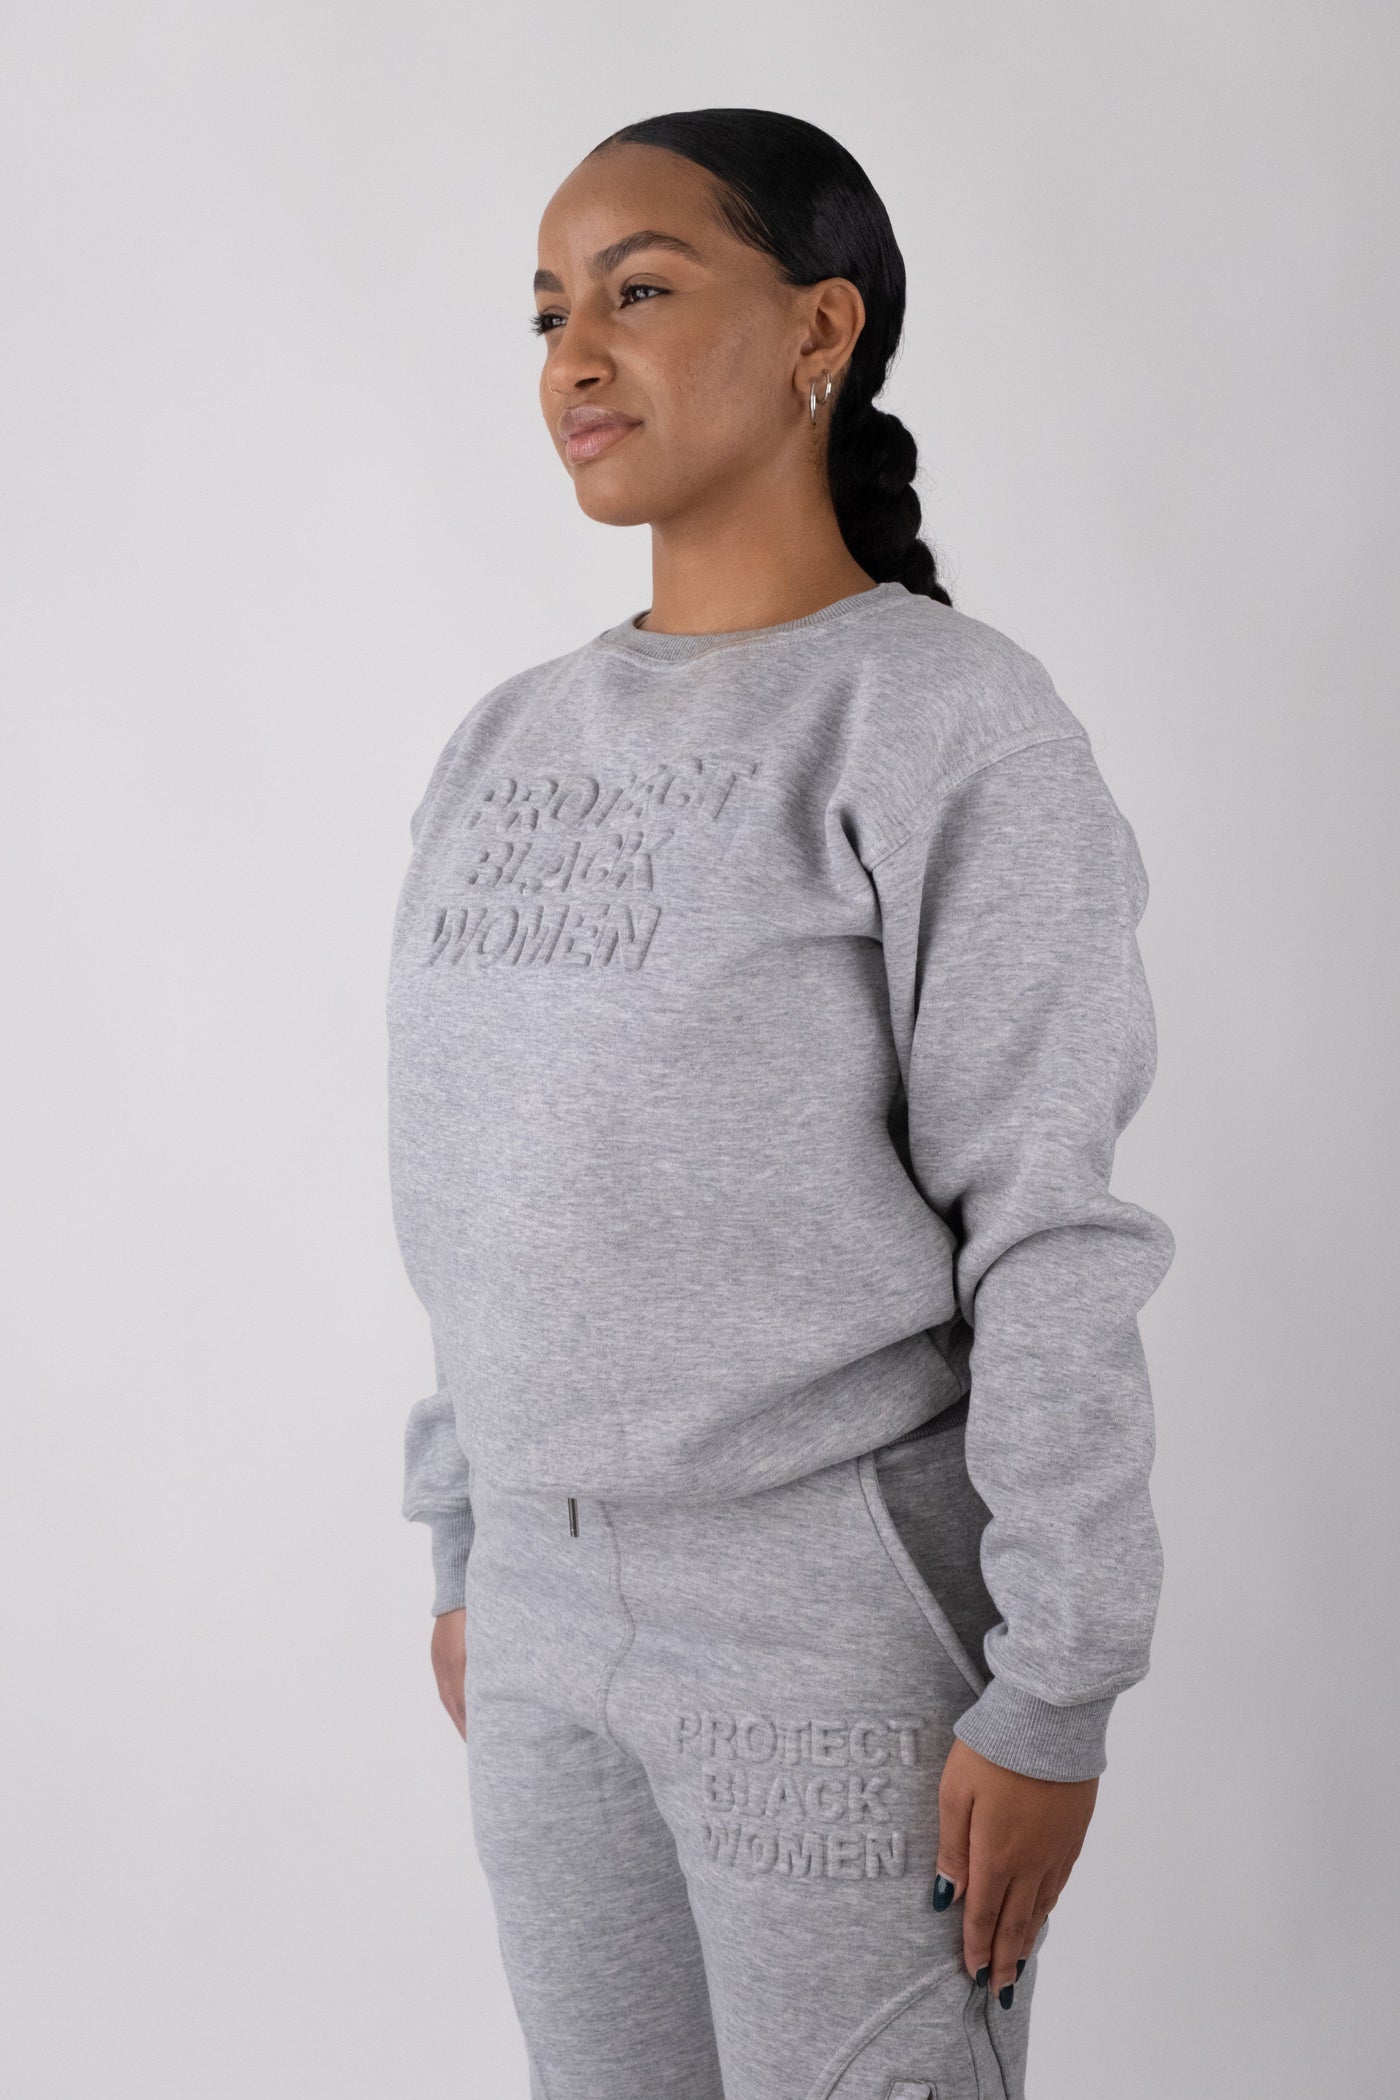 PBW - Crewneck Sweatshirt (Heather) - 3D Embroidery